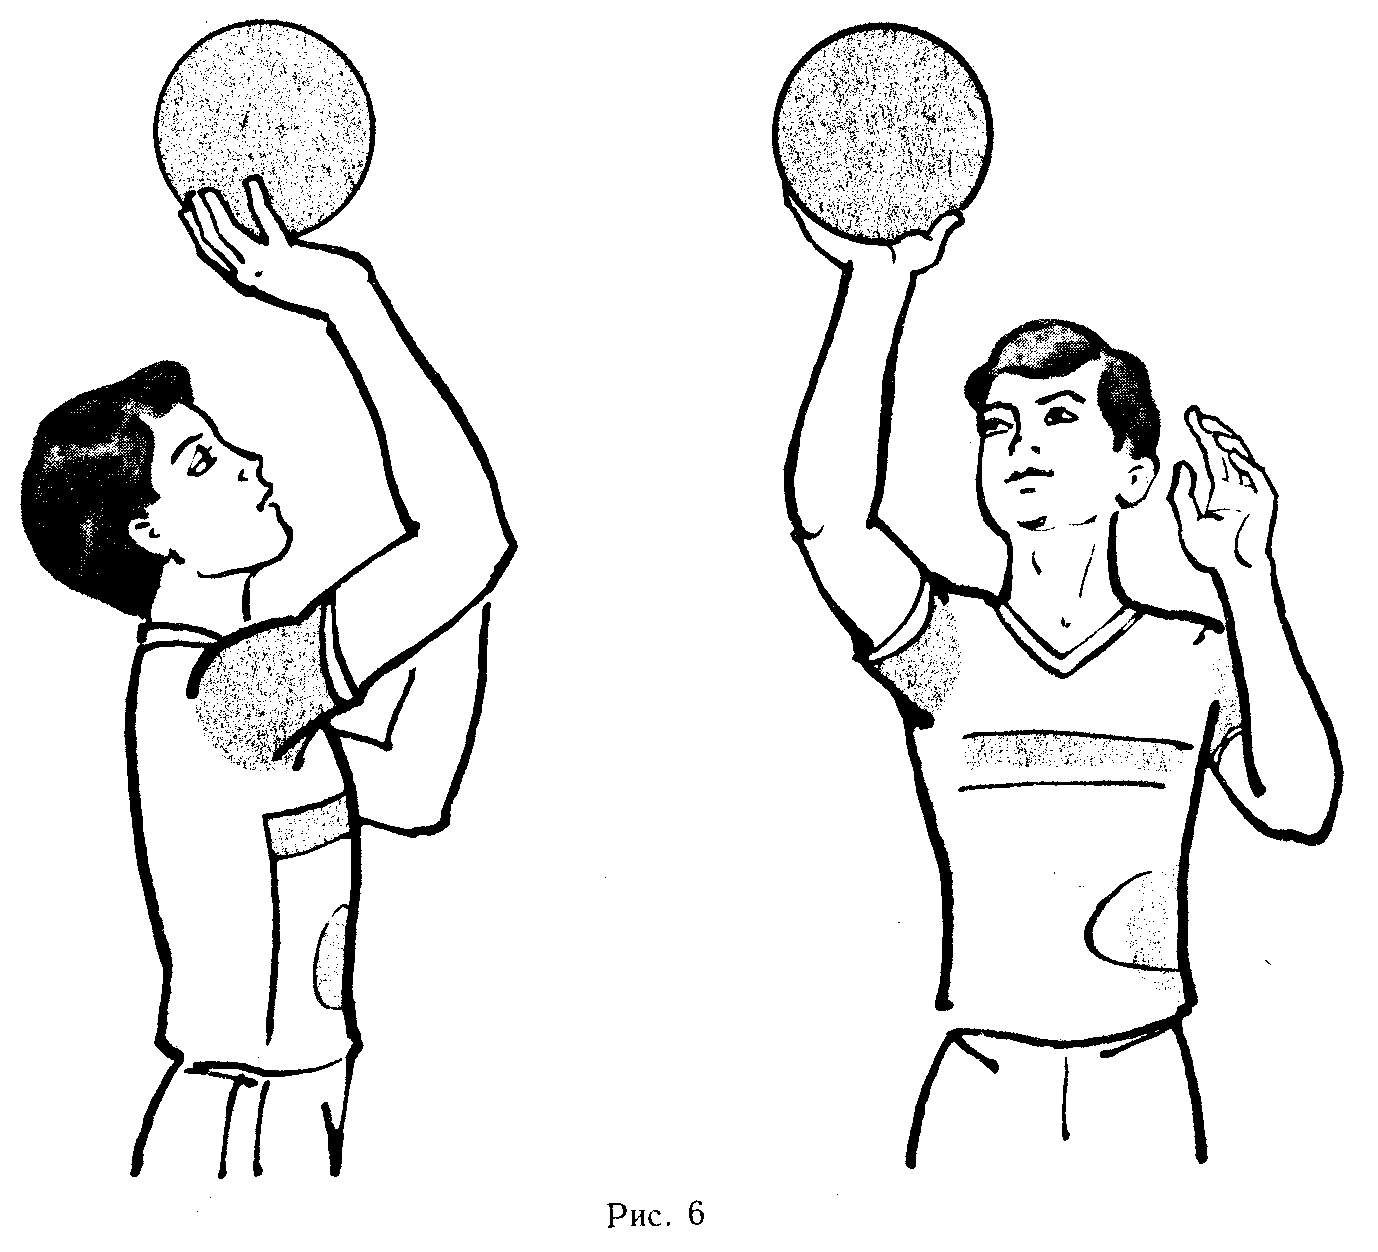 Мяч вводят в игру в волейболе. Прием снизу двумя руками в волейболе. Прием мяча снизу двумя руками в волейболе. Техника передач мяча в парах сверху и снизу. Волейбол. Передача снизу в волейболе.